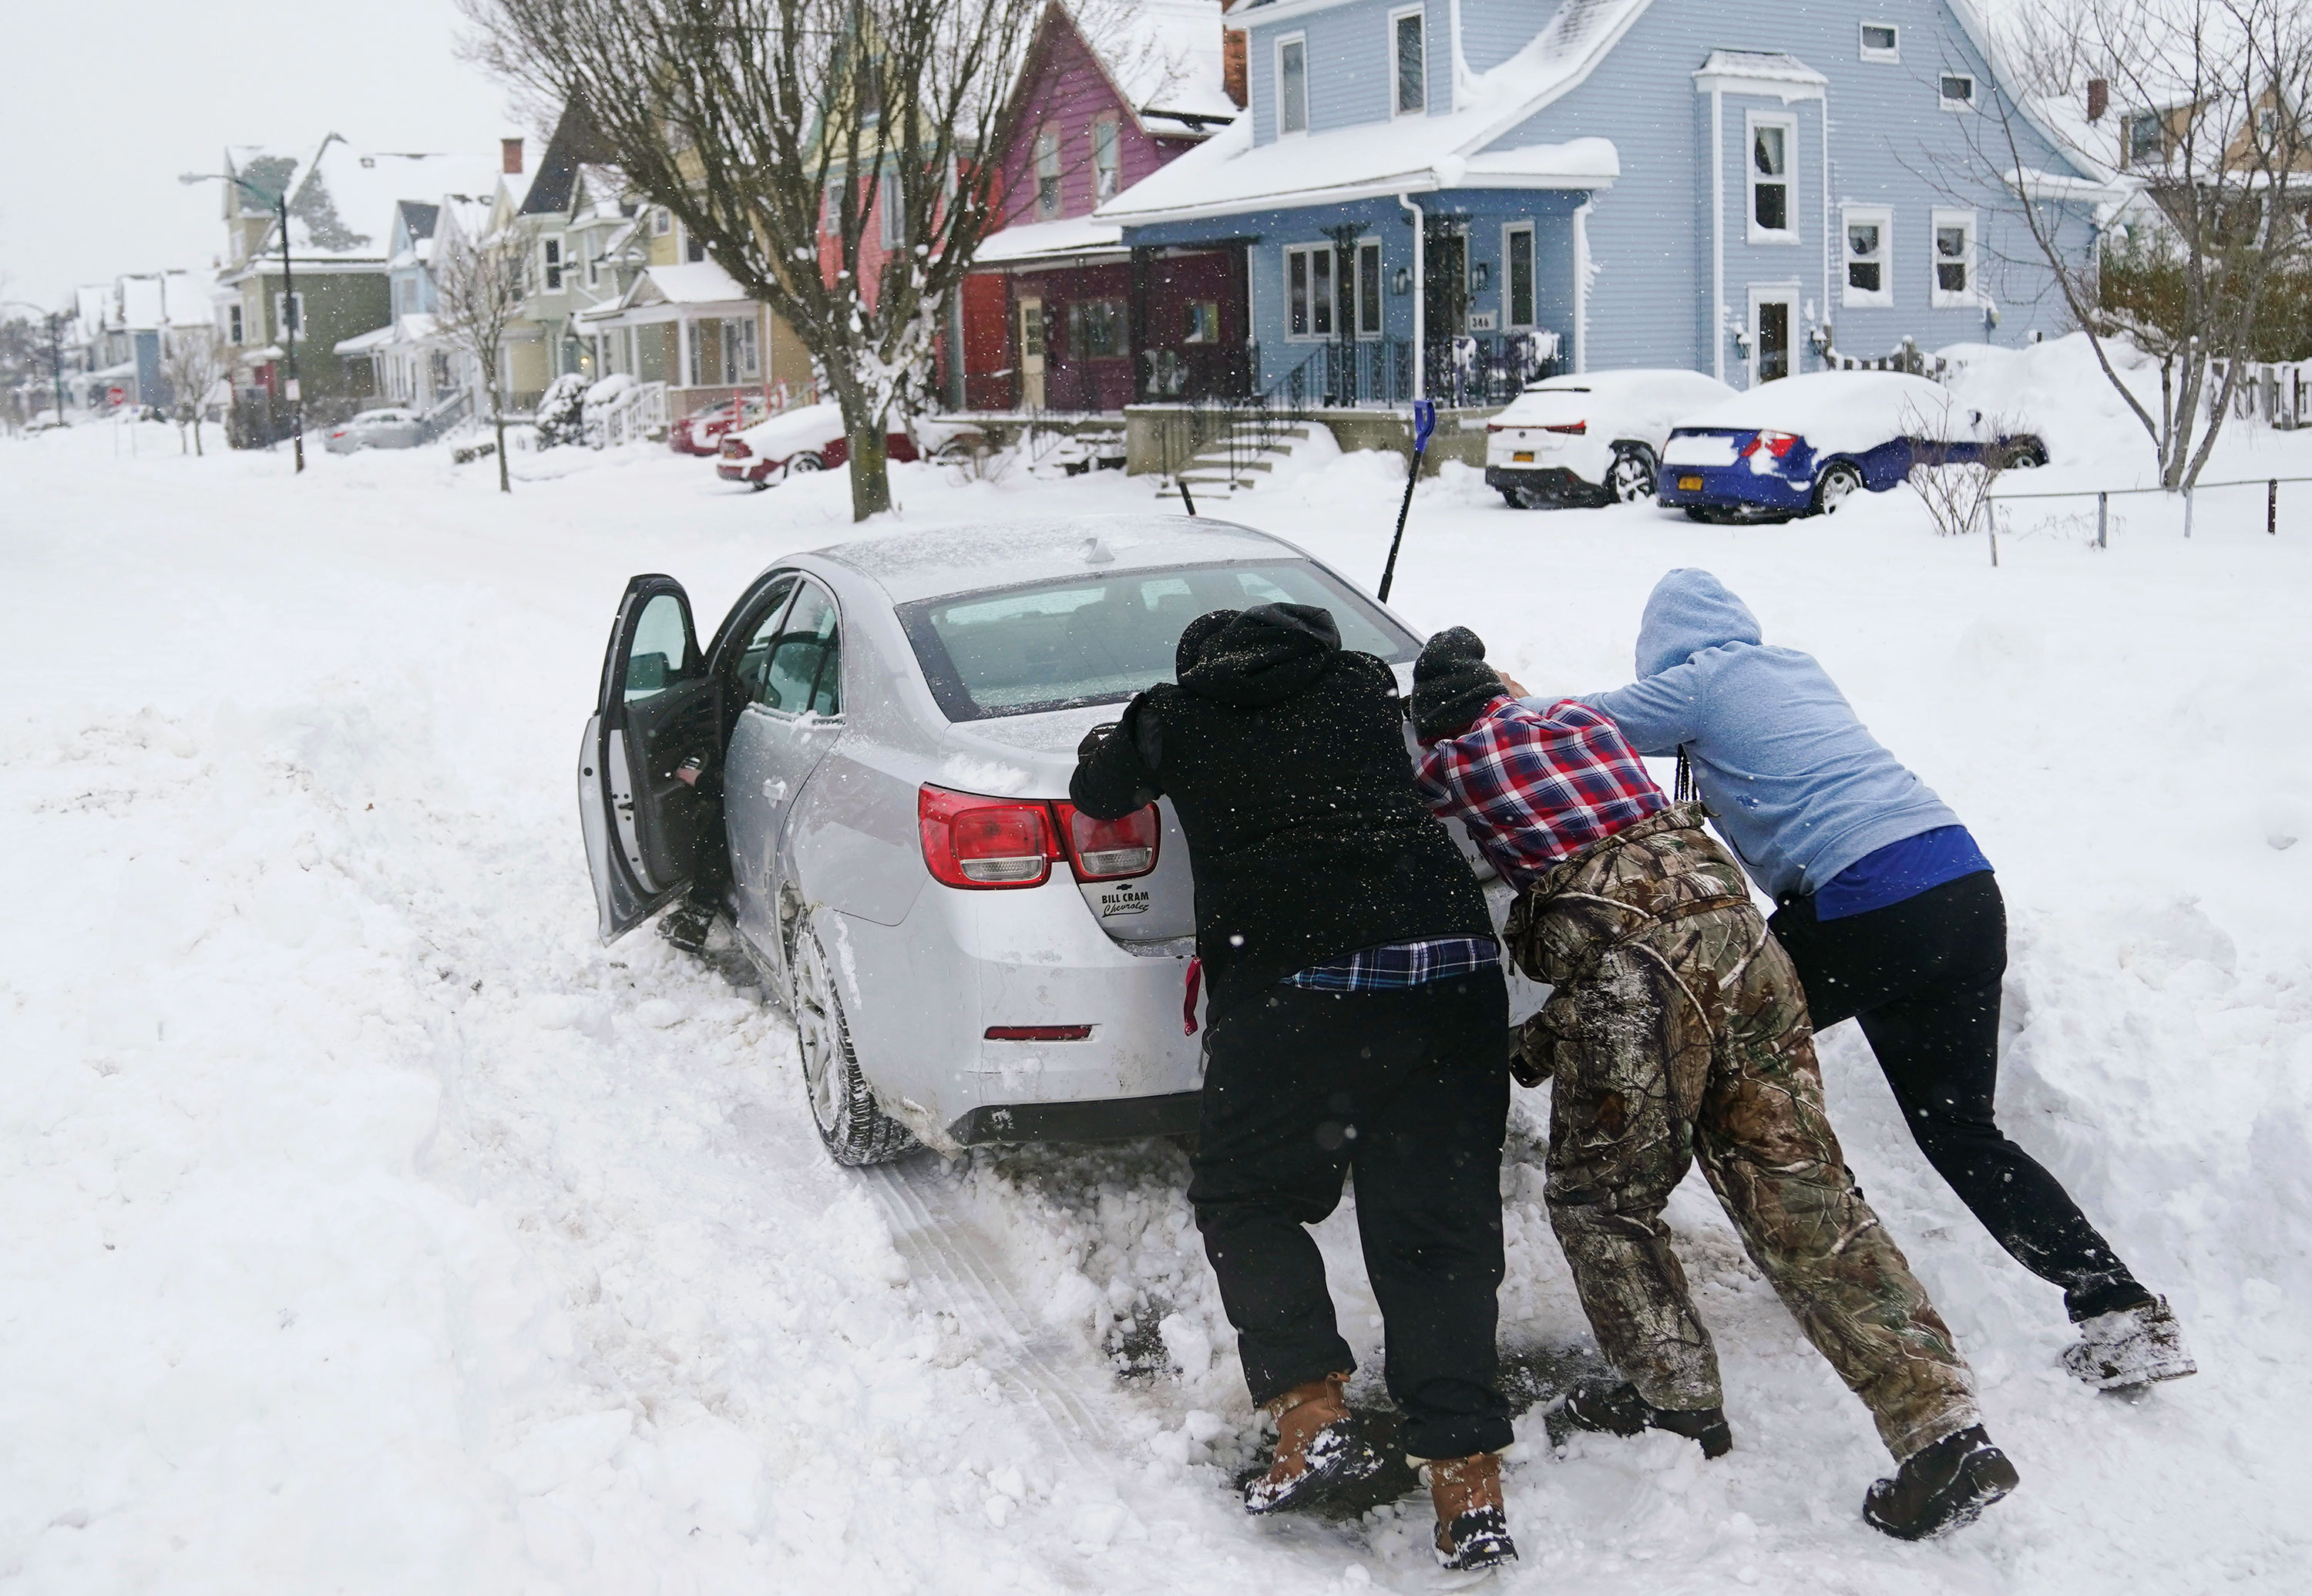 Neighbors help push a motorist stuck in the snow in Buffalo on Monday.